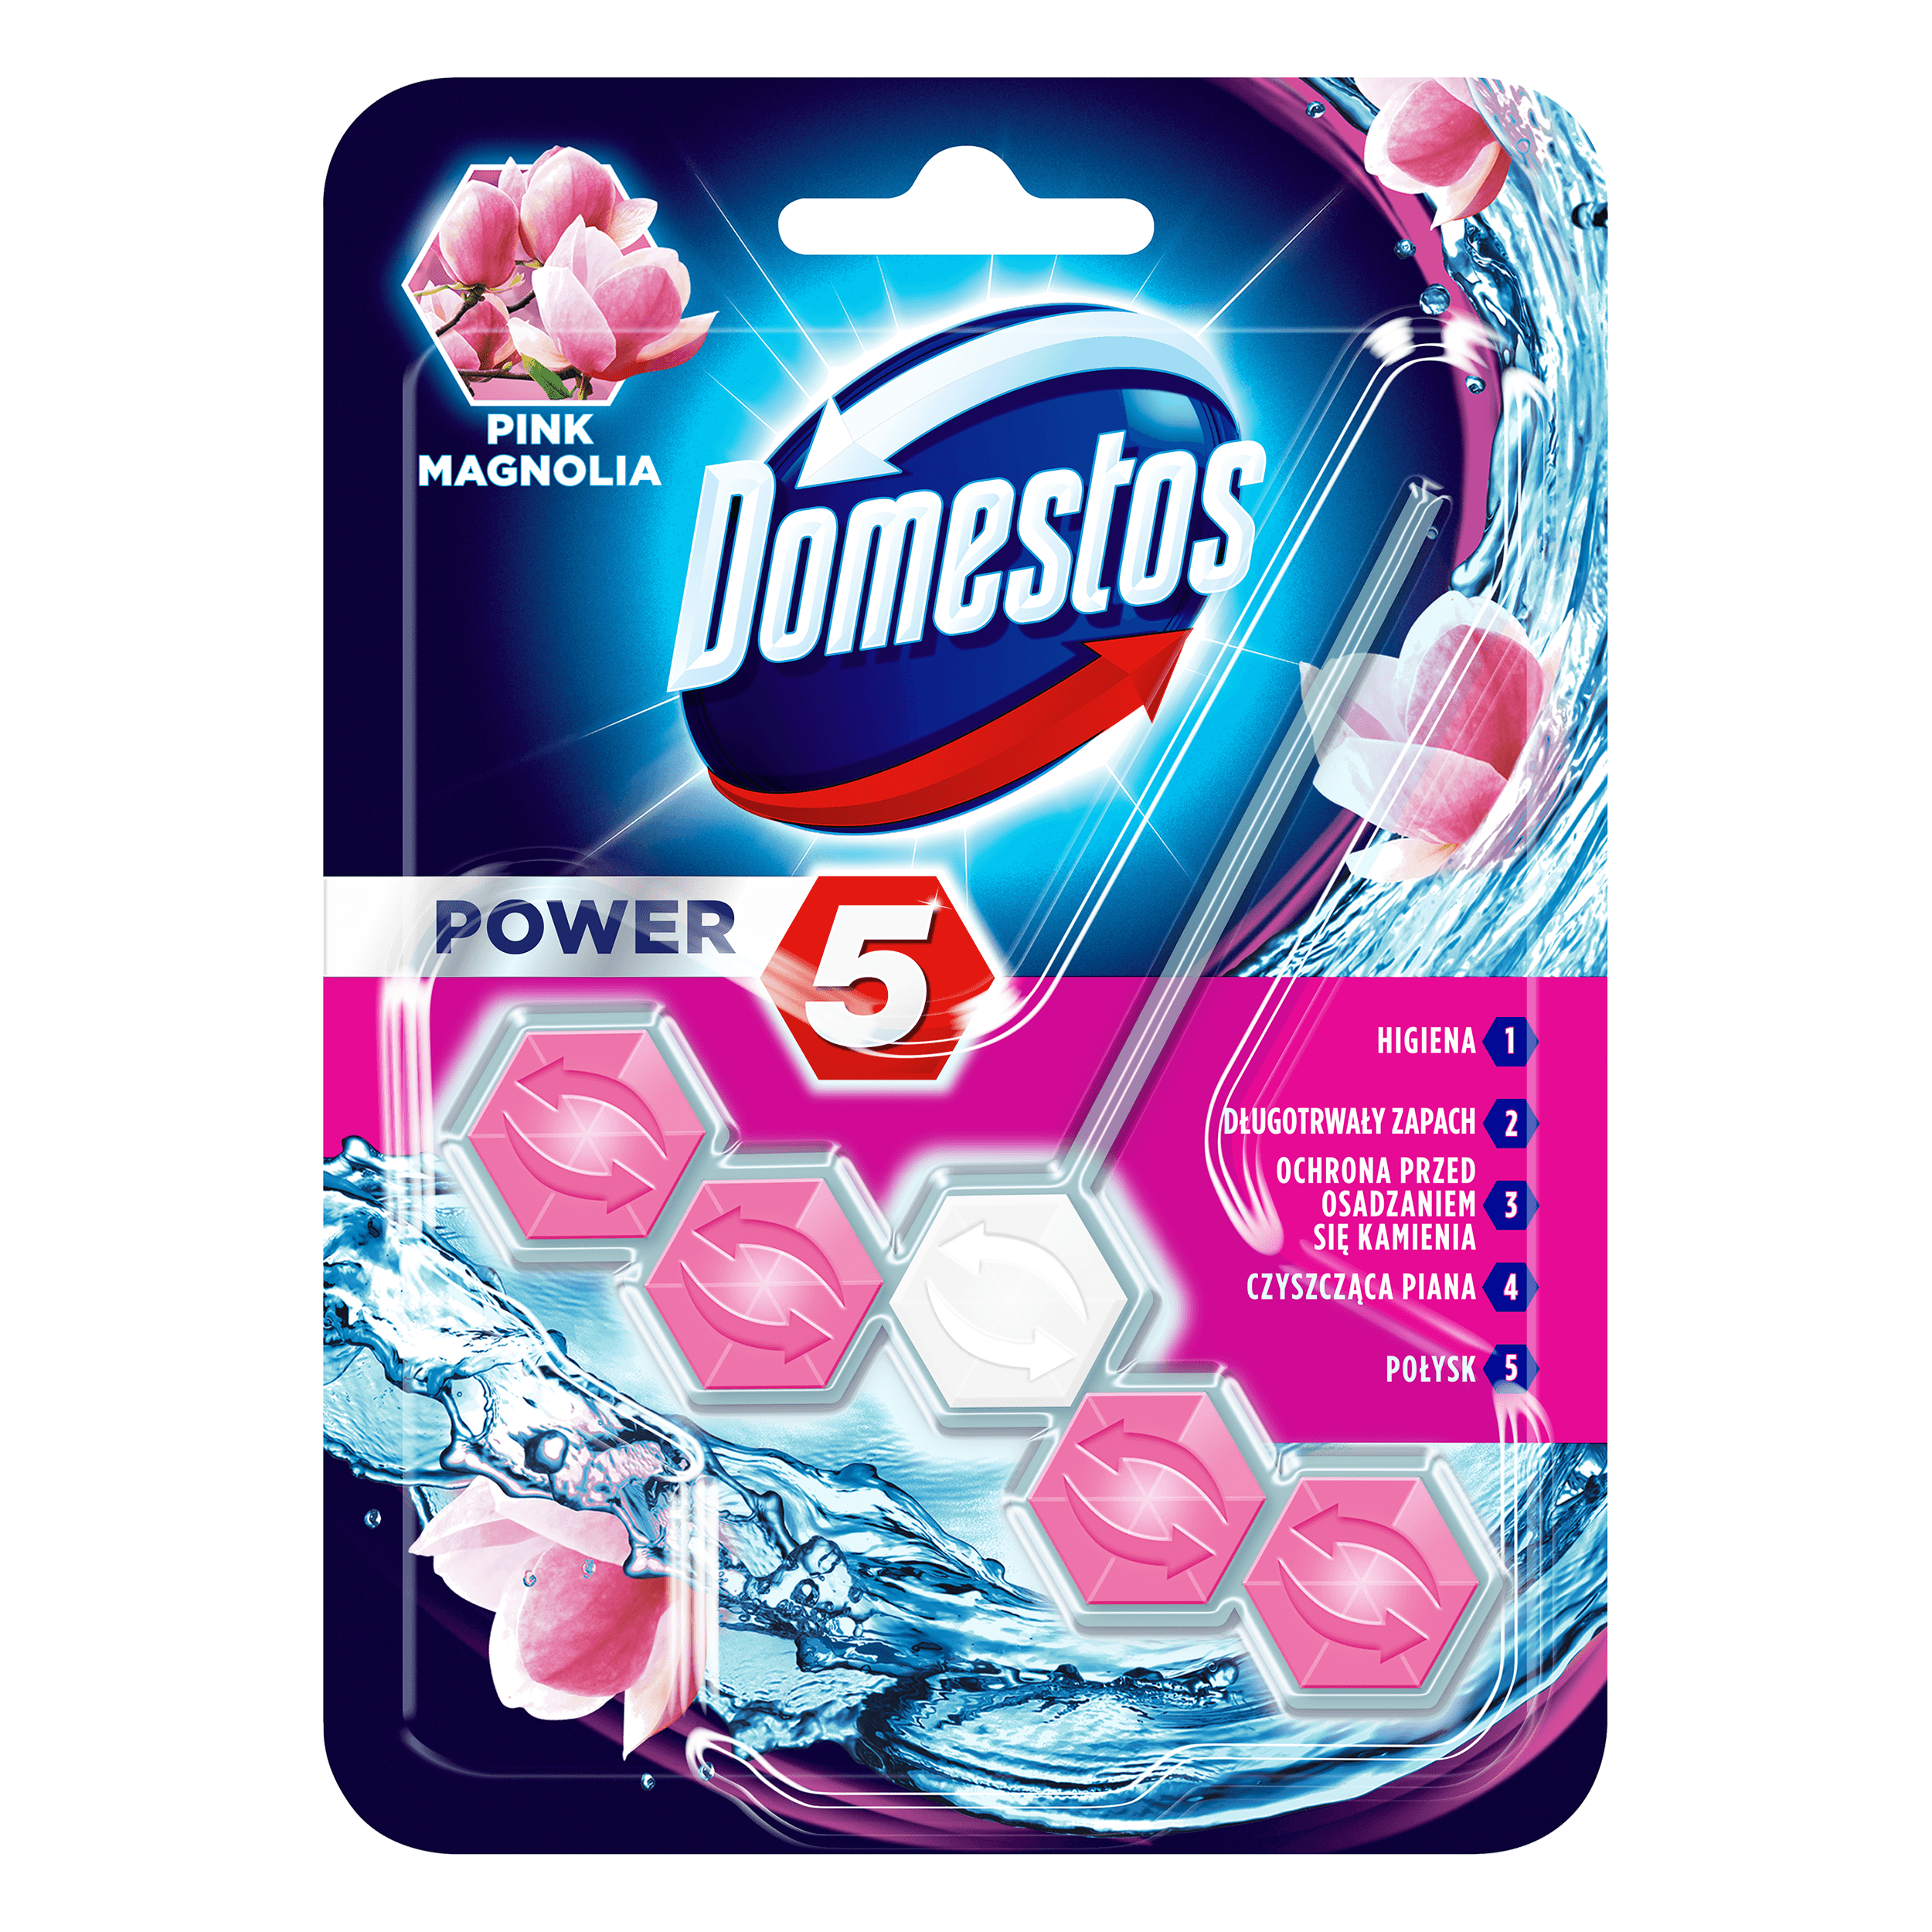 Fragrance bar for toilets Domestos Power5, 55g - Pink / Magnolia